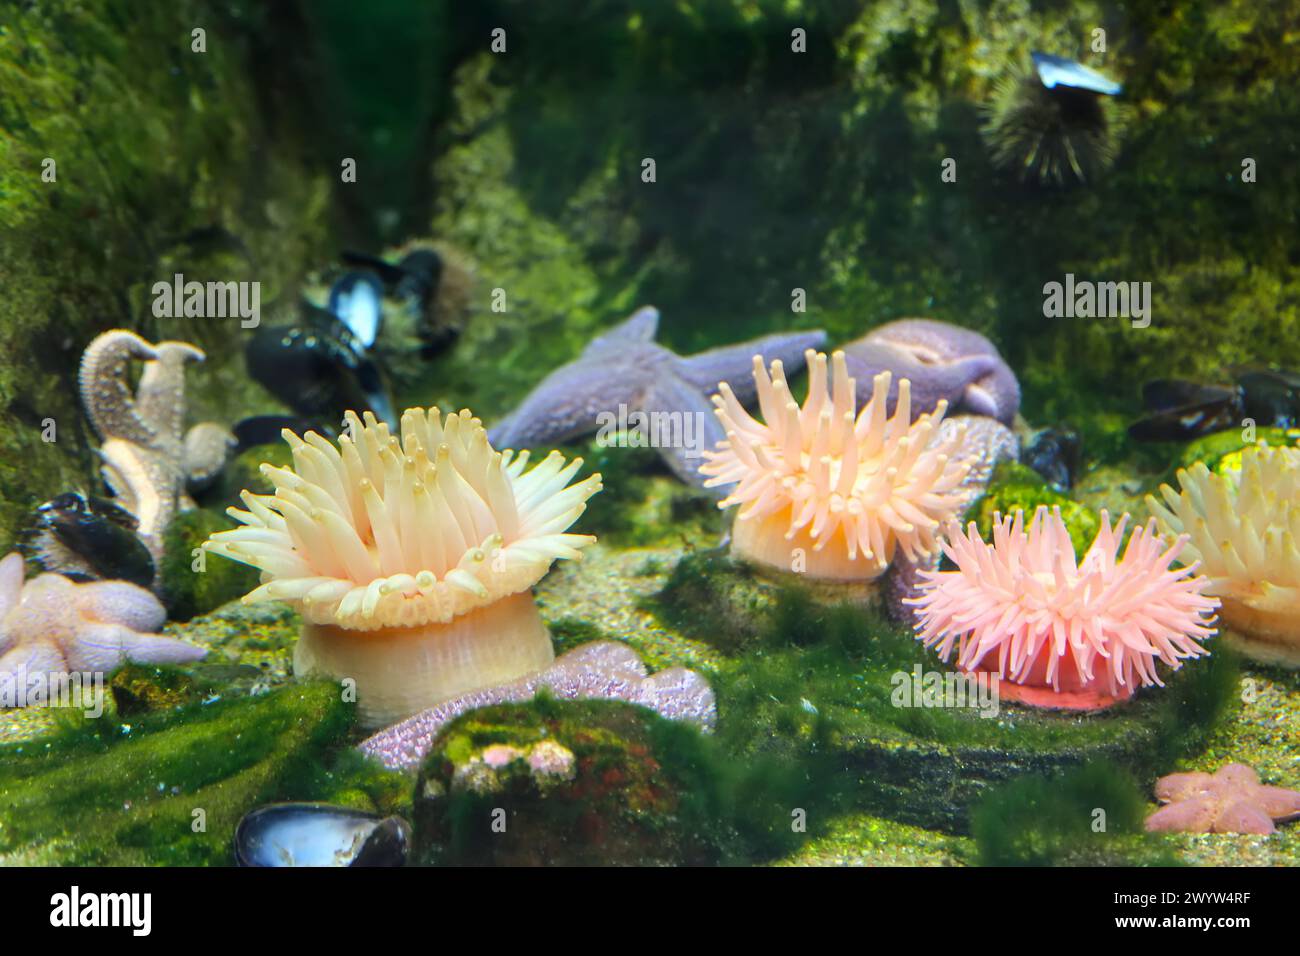 Seastars and anemones stuck to a rock in the ocean aquarium Stock Photo